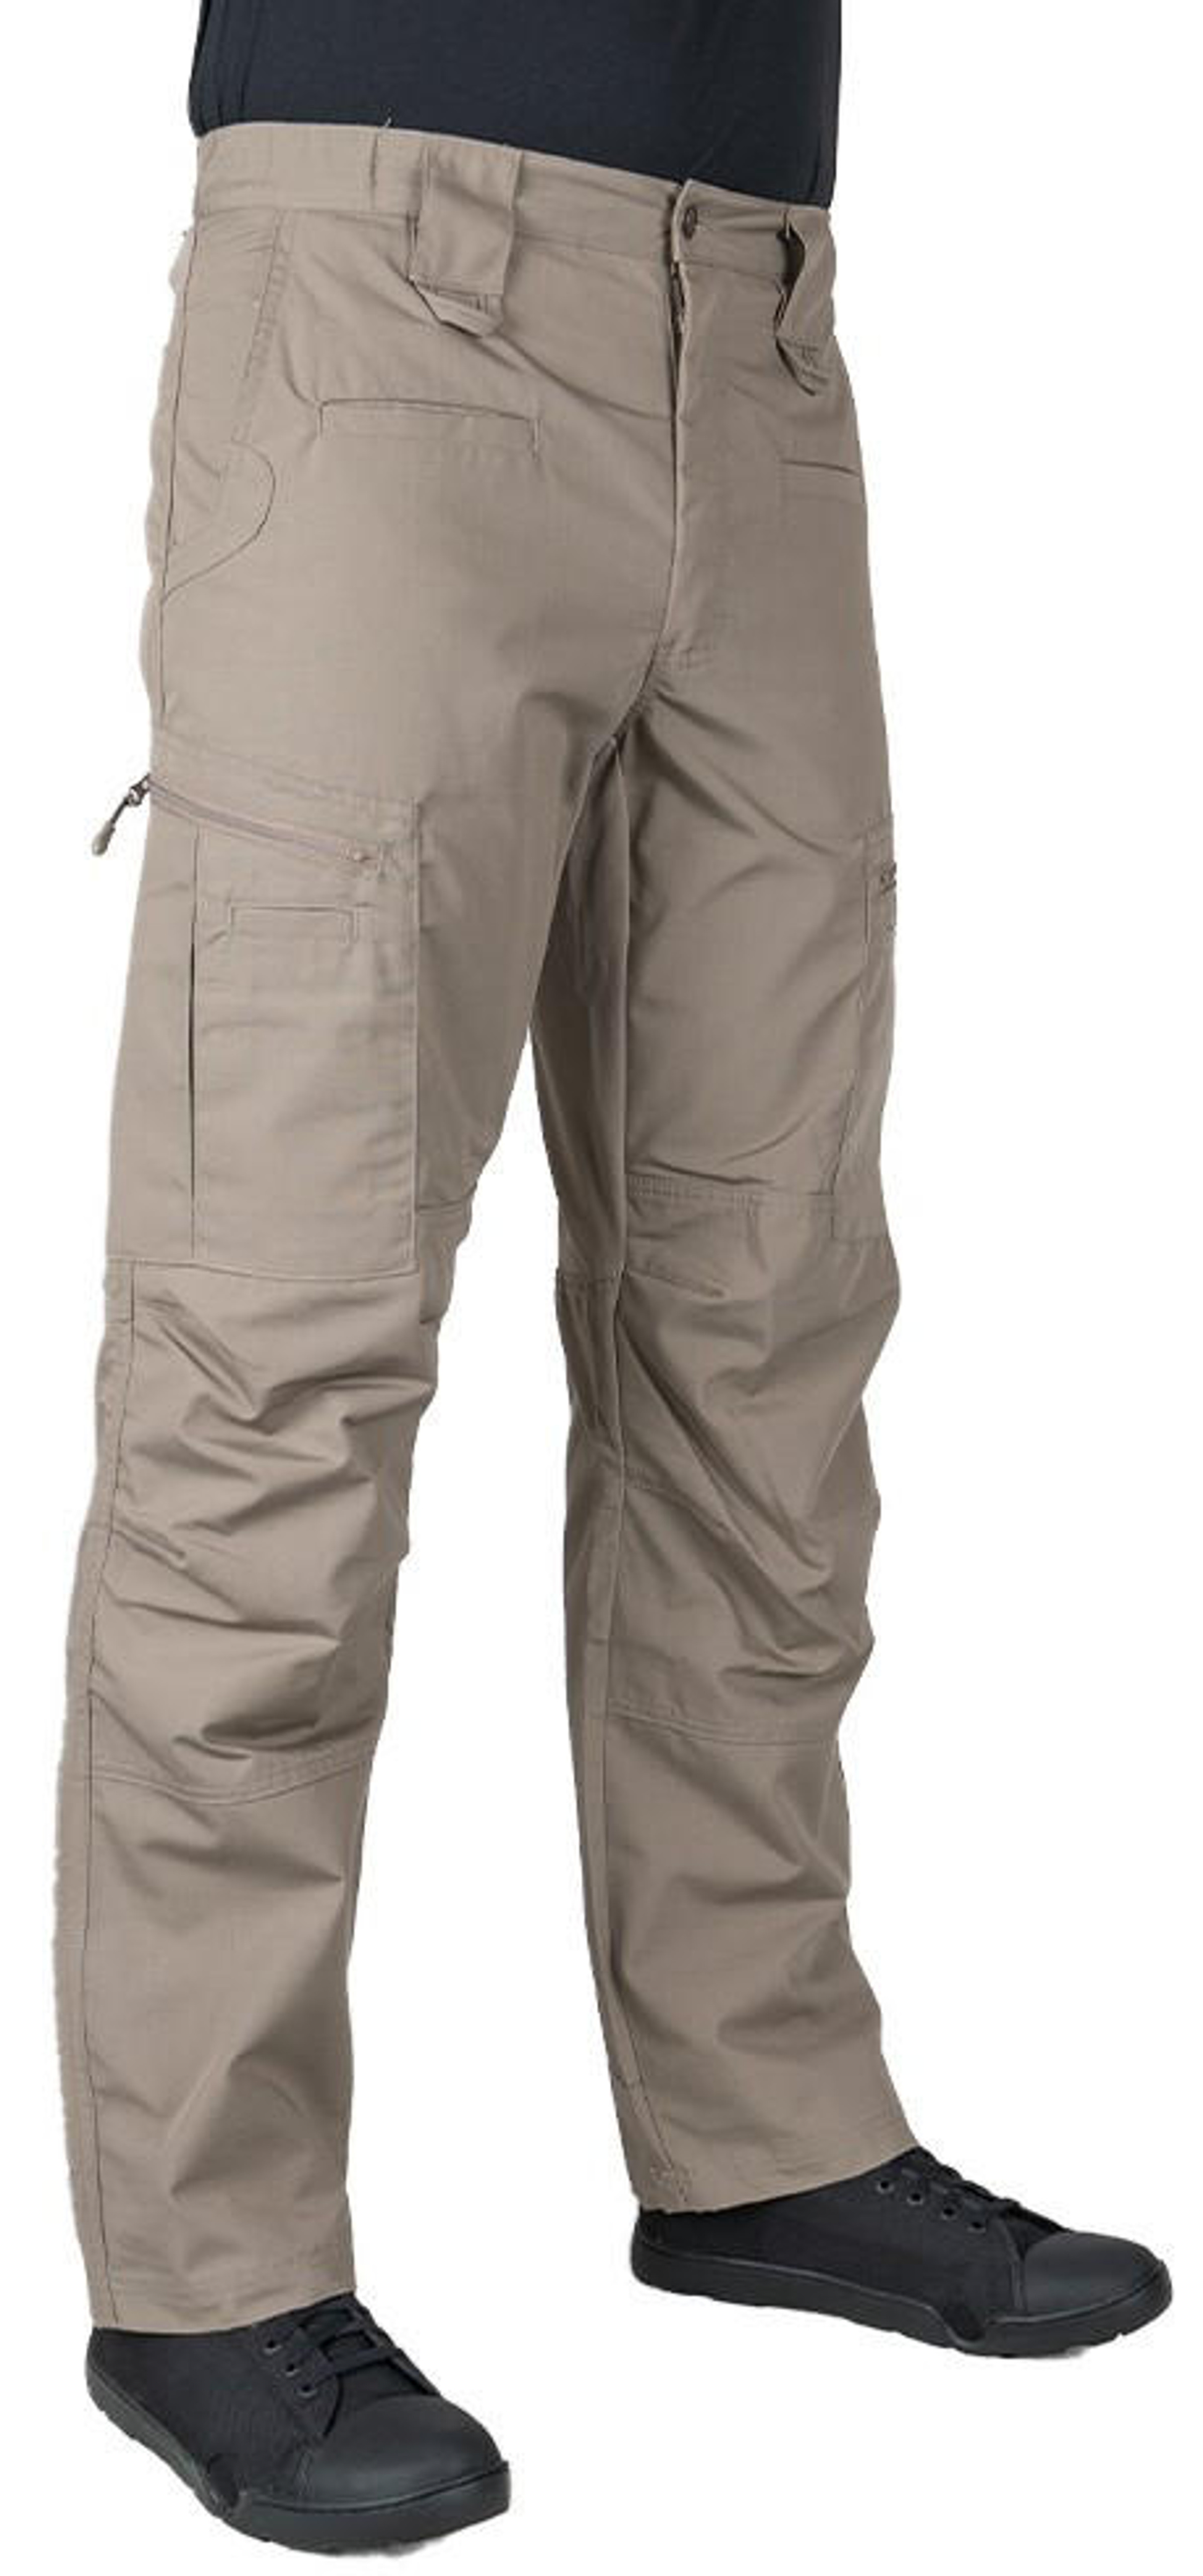 LAPG Atlas Pants | Men's Tactical Pants with Stretch Tech System ...